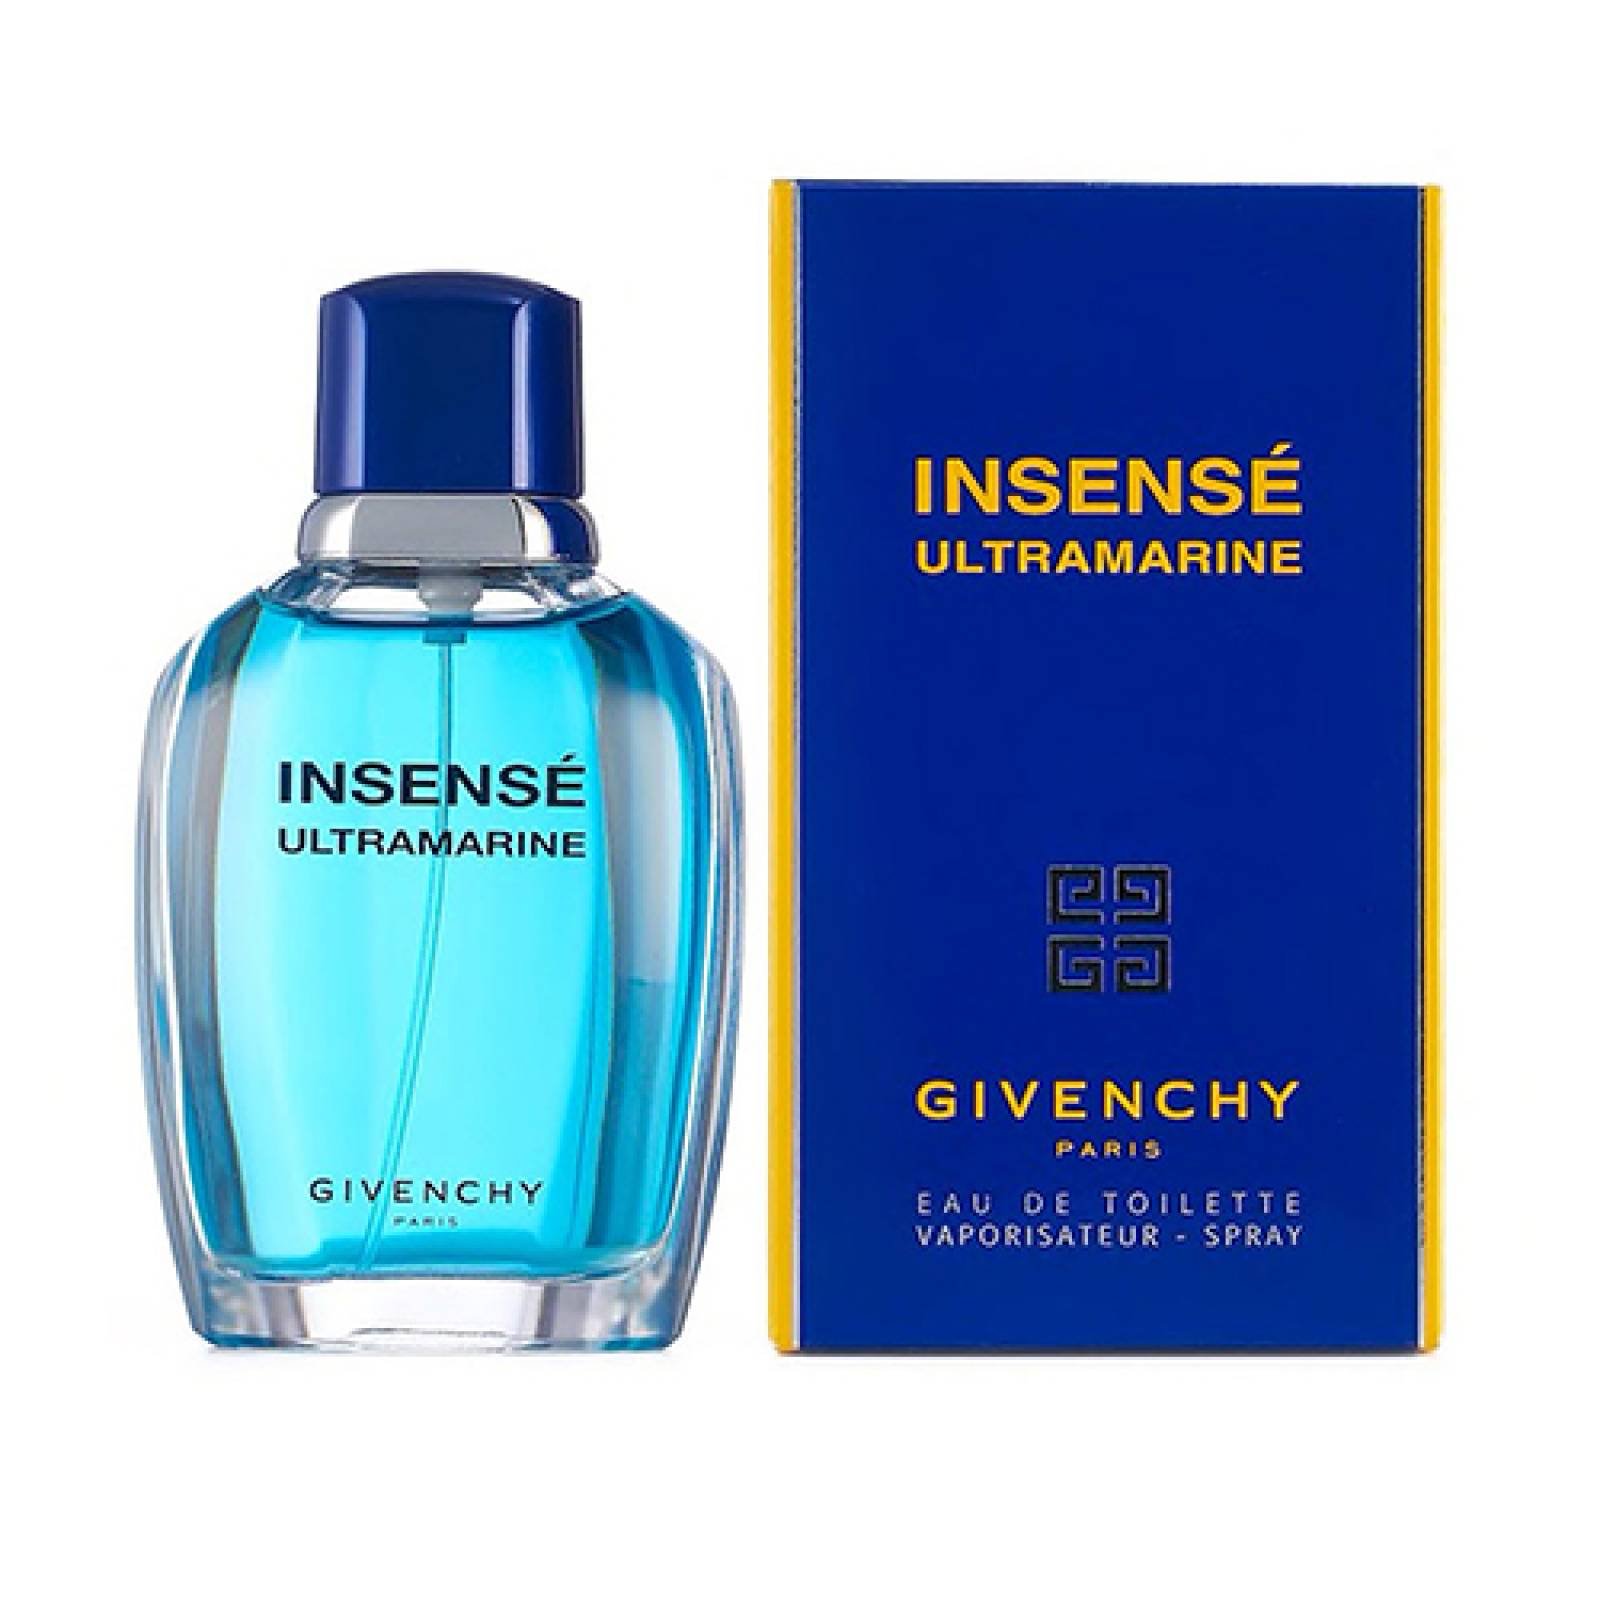 perfume insense ultramarine de givenchy 100ml